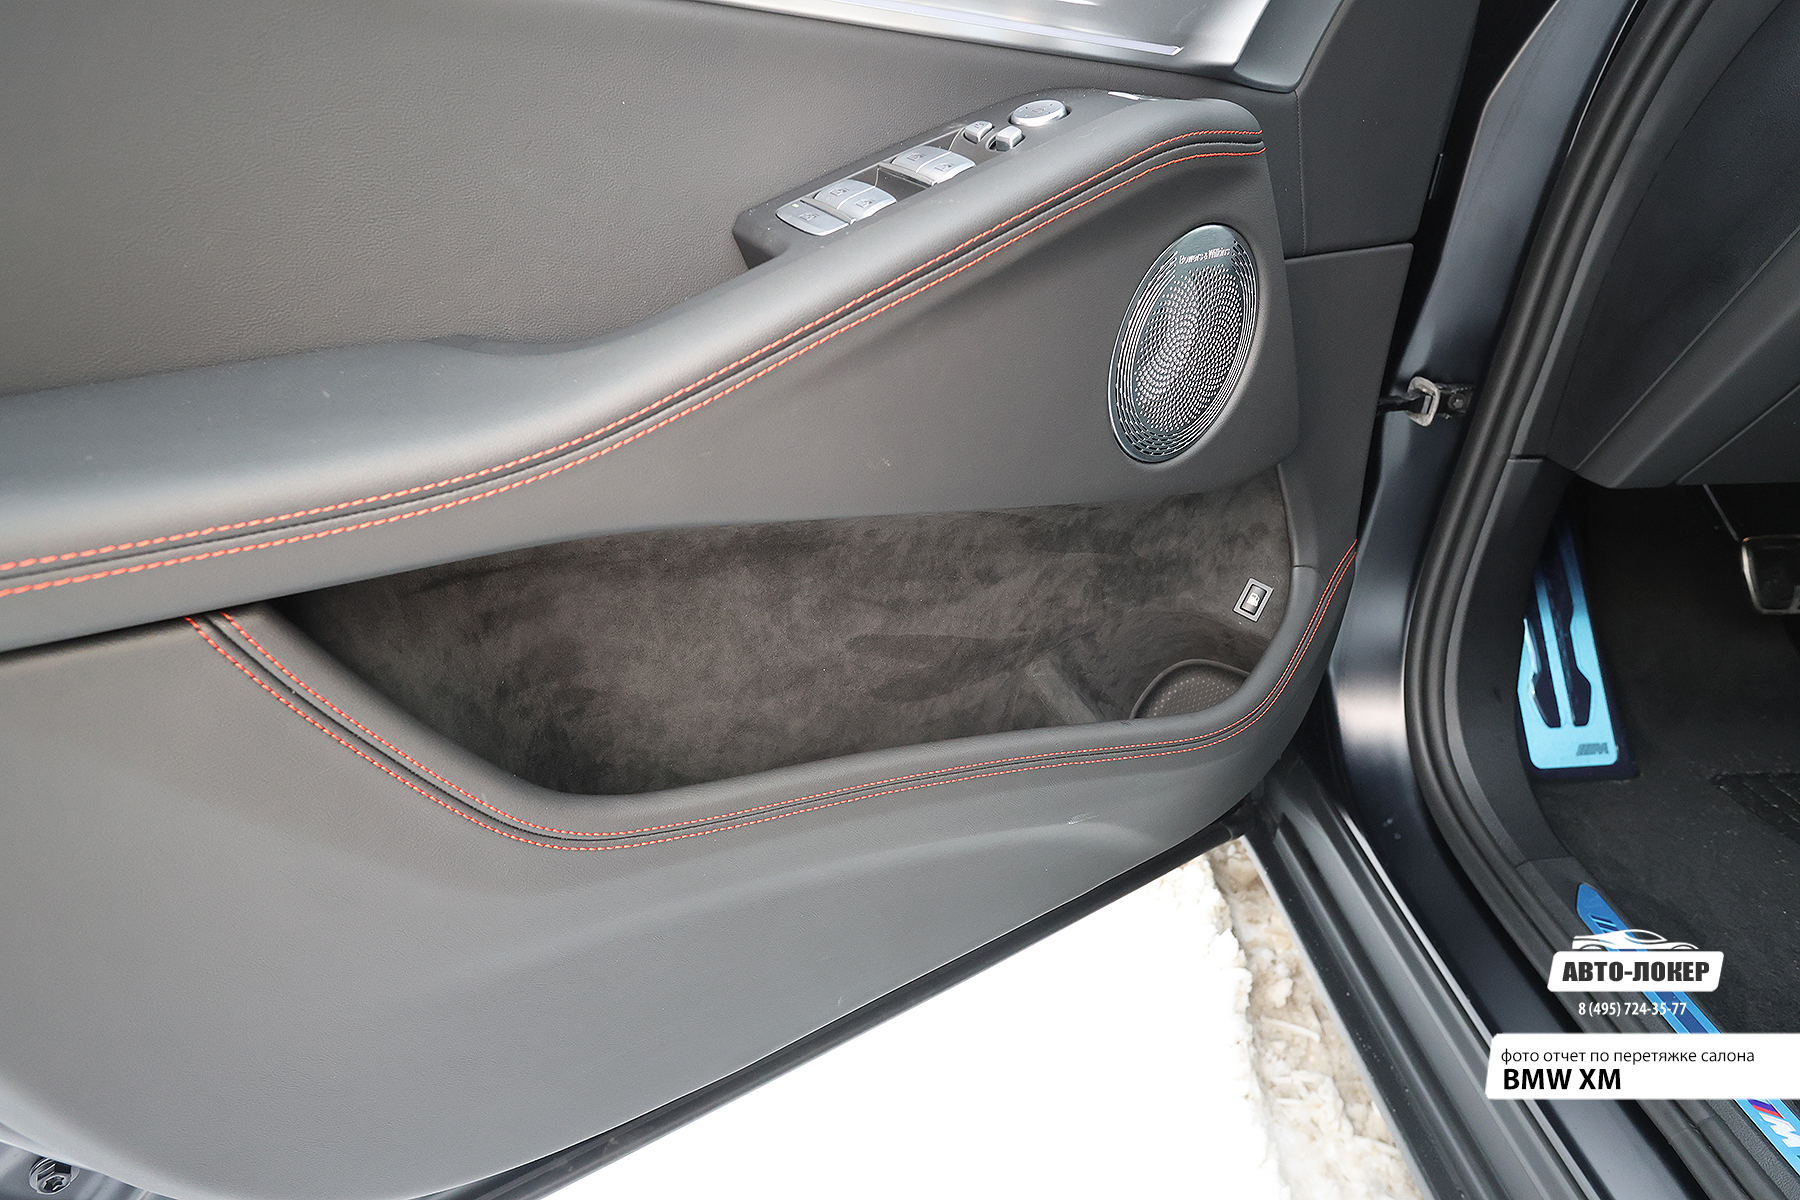 Перетяжка карманов дверей в Алькантару BMW XM